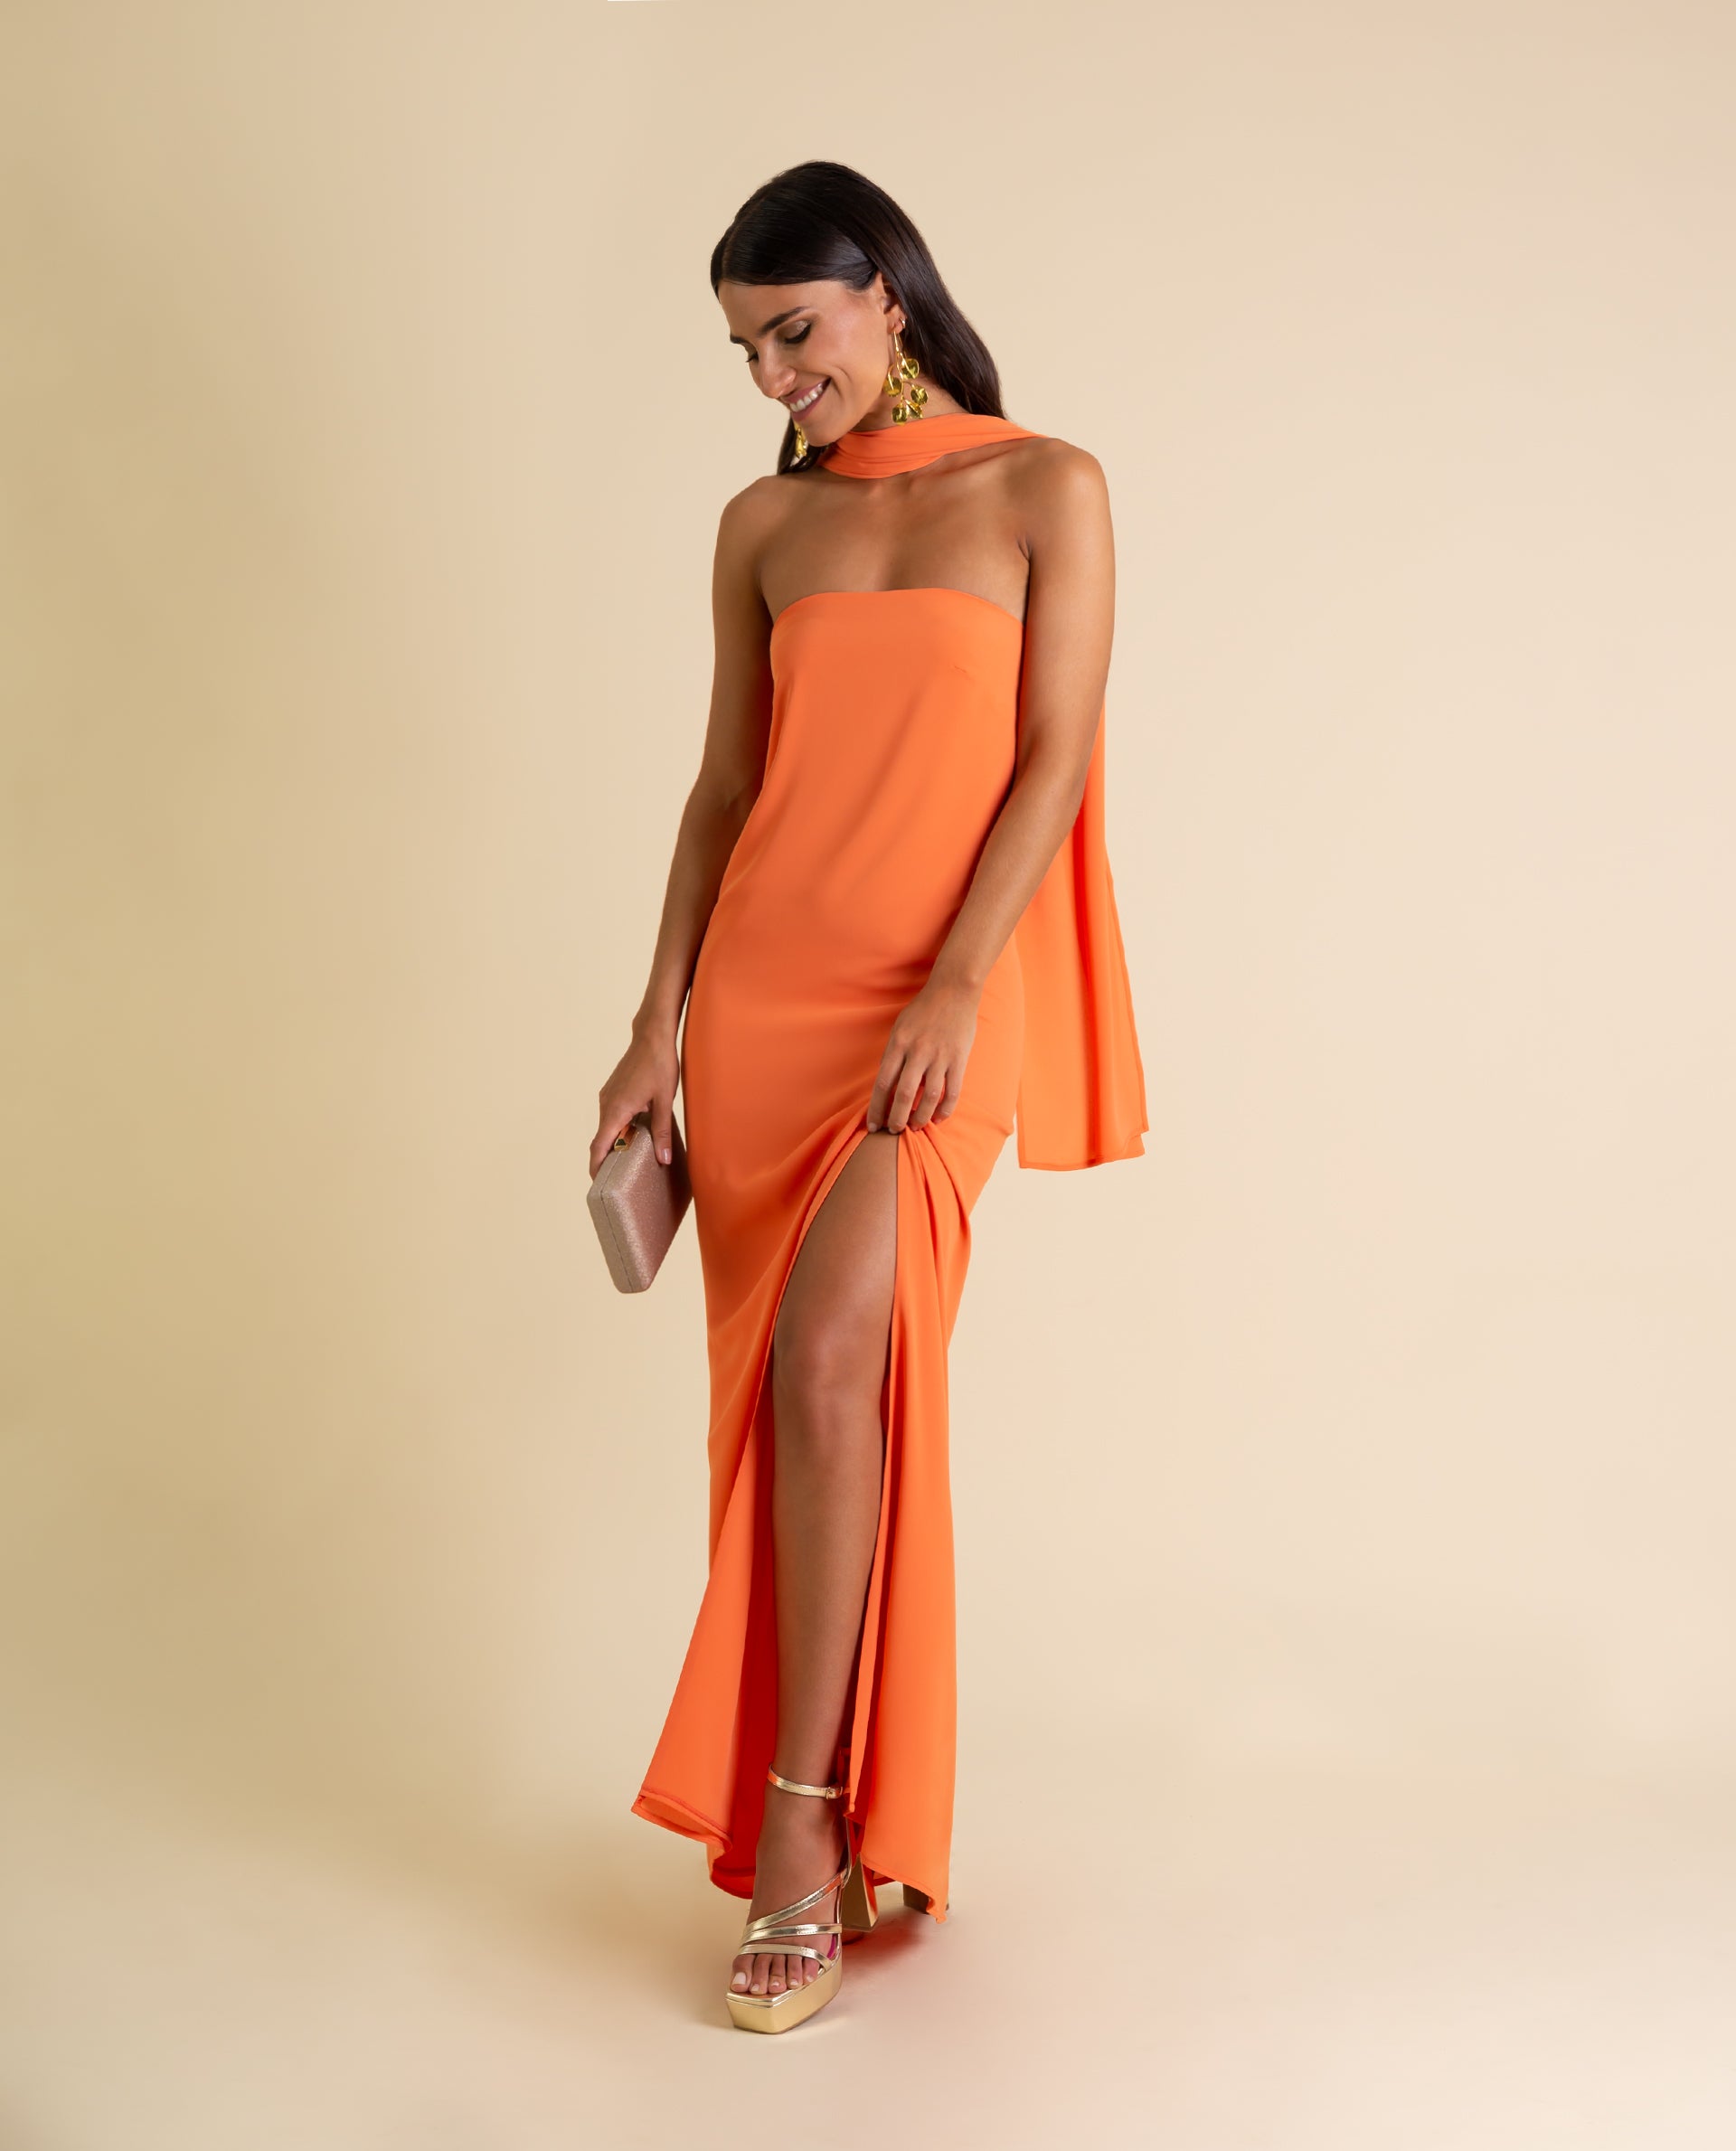 Lets Be Together Dress - Auburn  Moda de vestidos cortos, Ropa